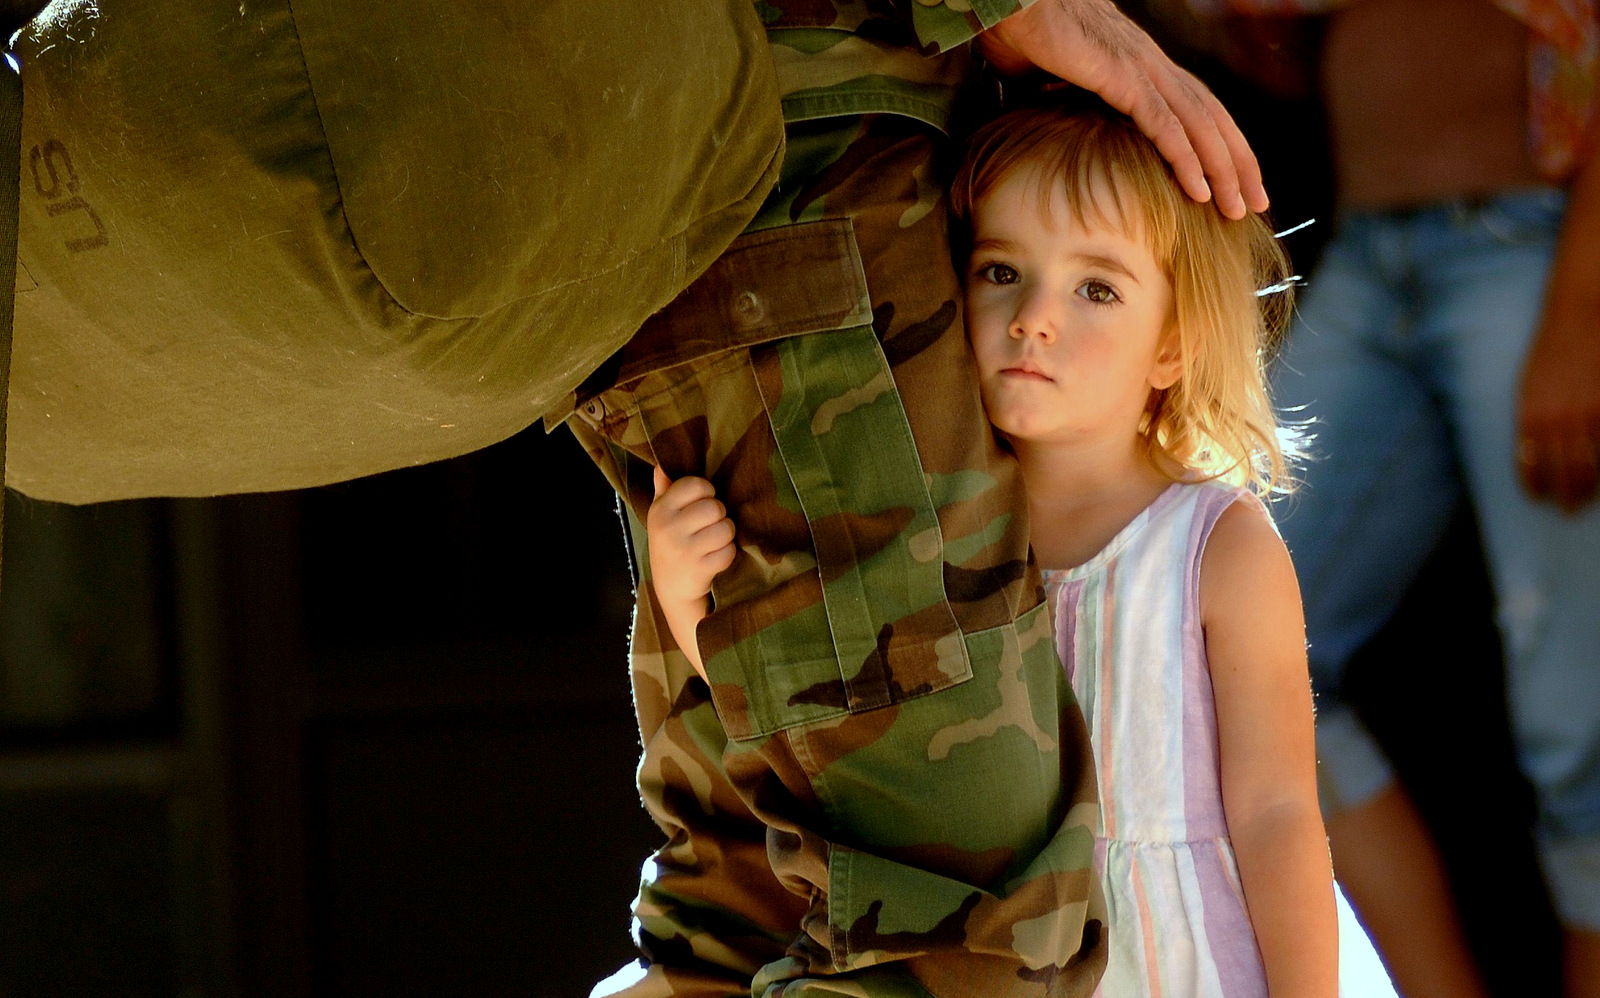 The US Militarys Child Sex Abuse Problem